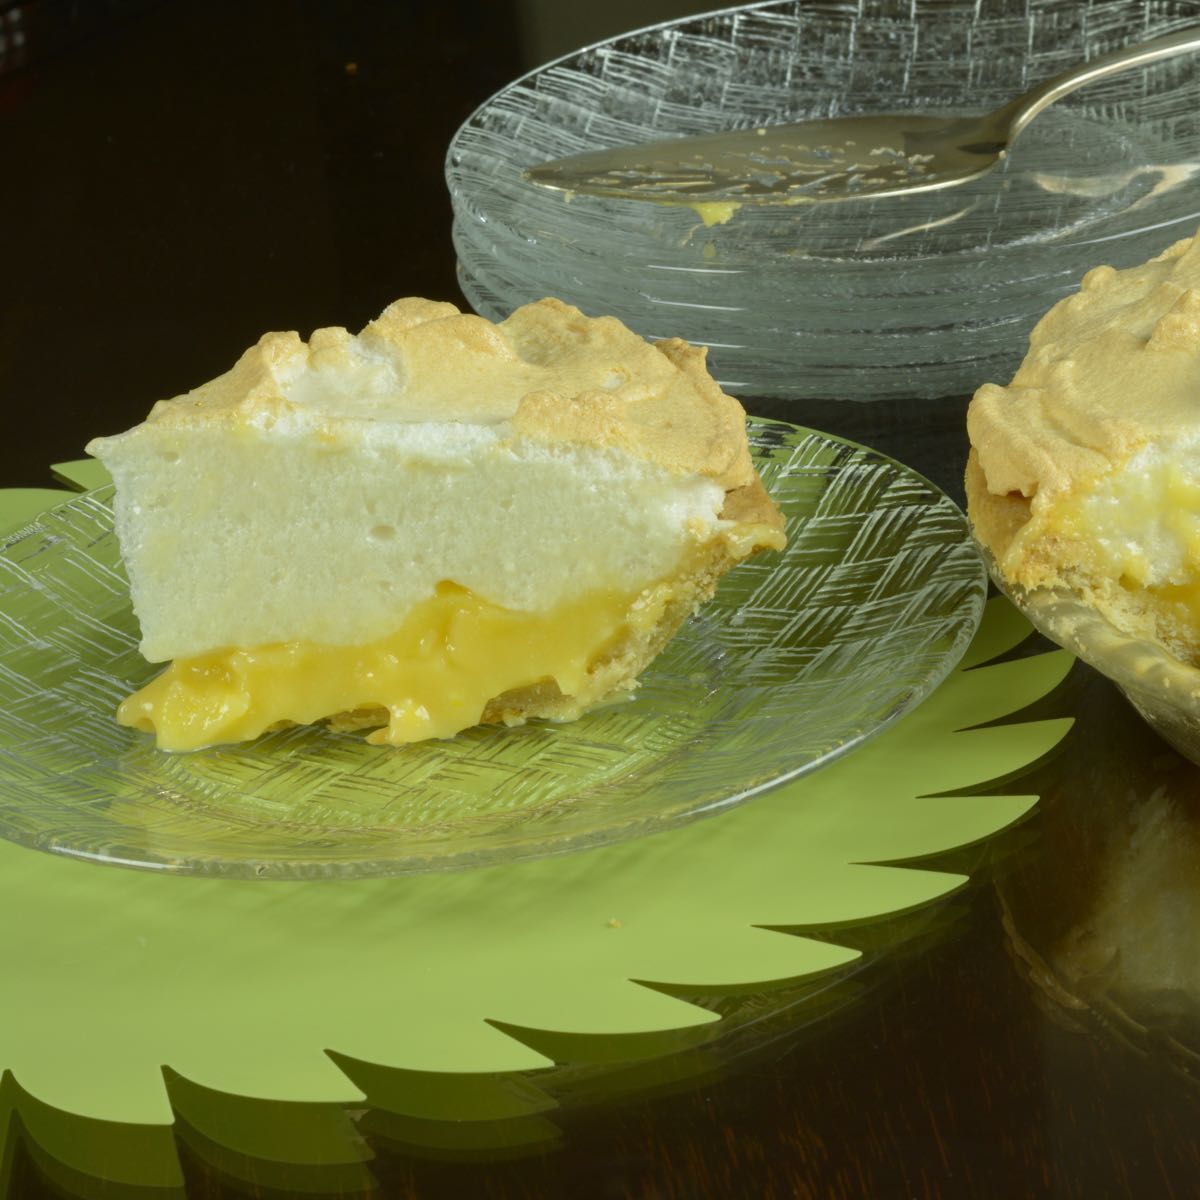 A piece of gluten free Lemon Meringue Pie cut and ready to serve.